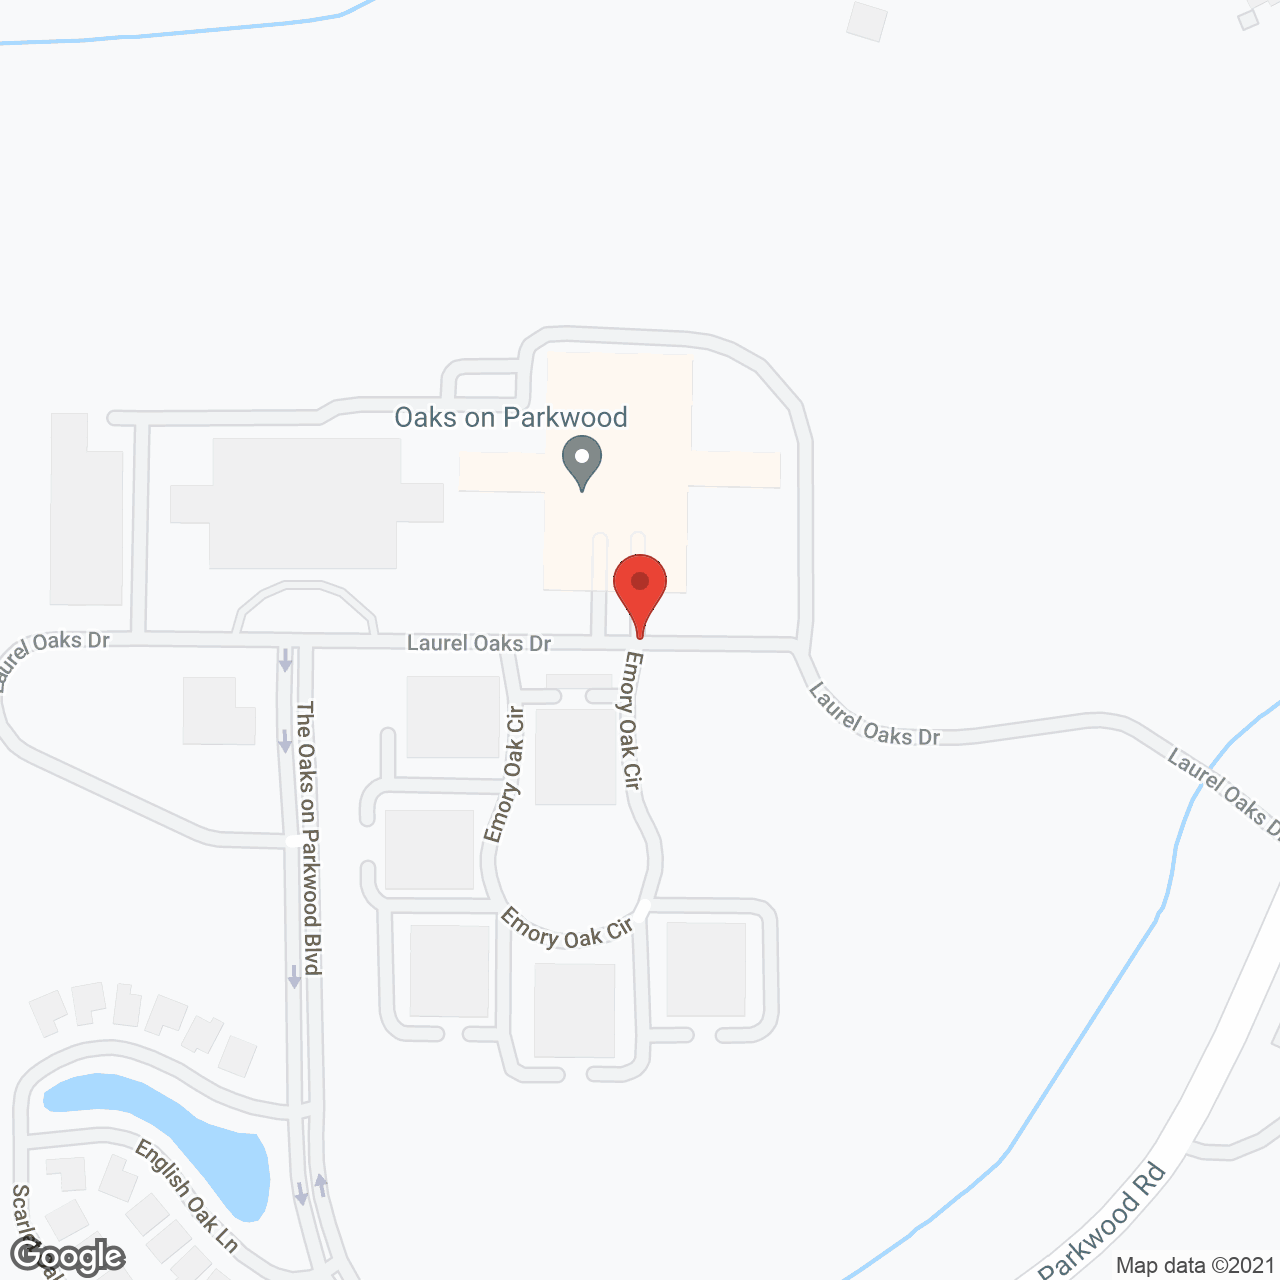 Oaks on Parkwood in google map